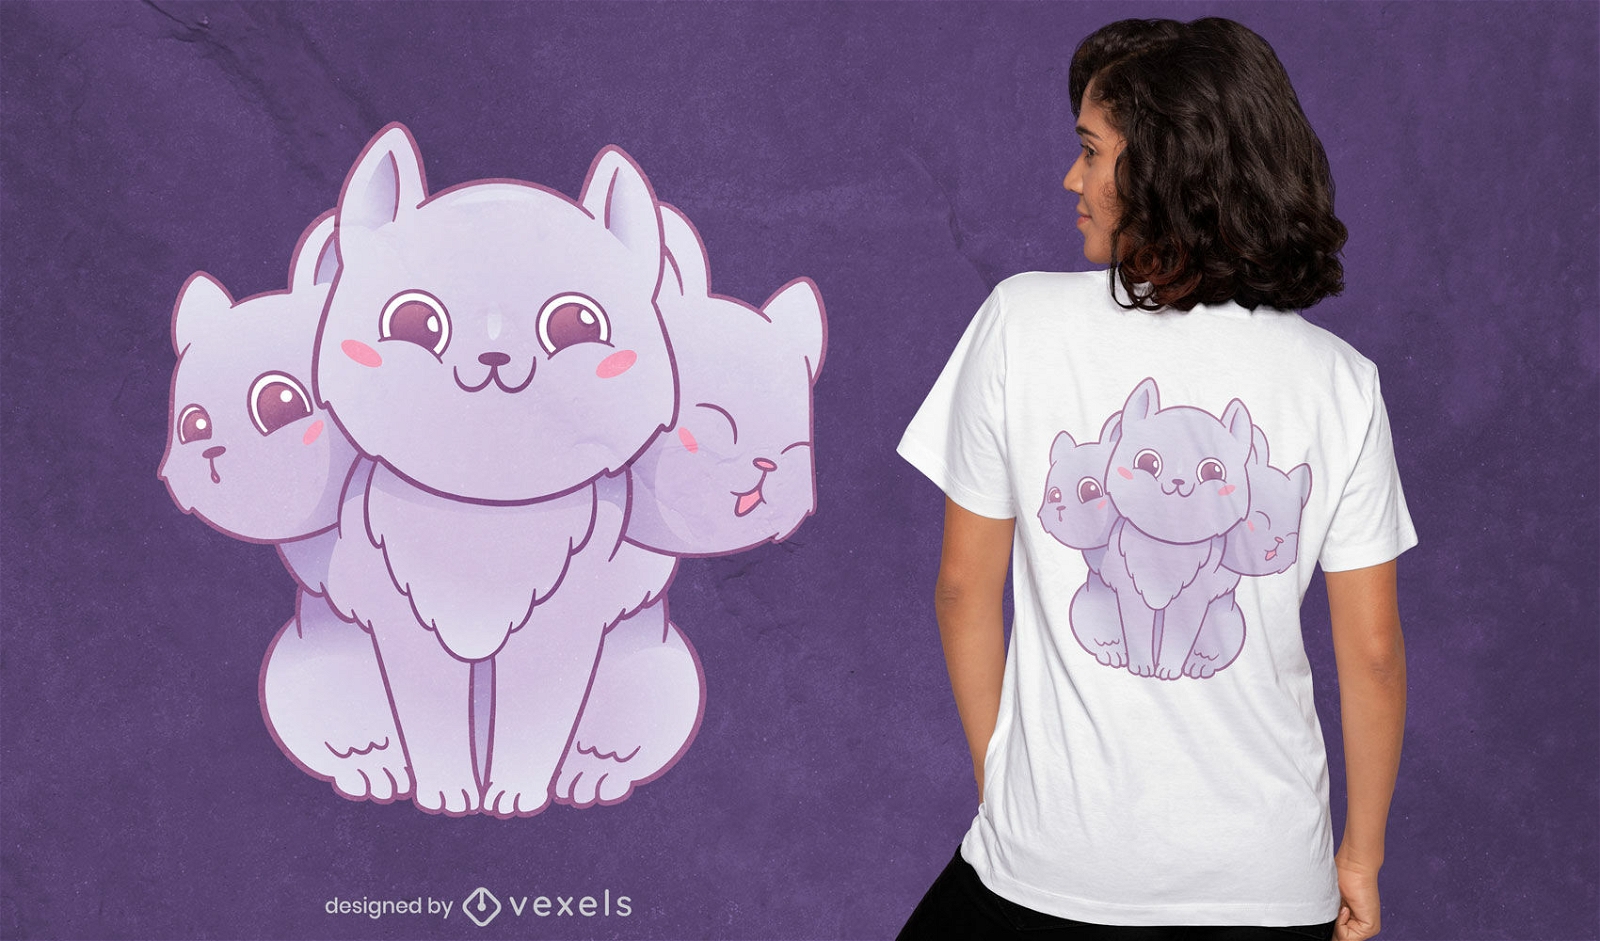 Three headed cat creature t-shirt design